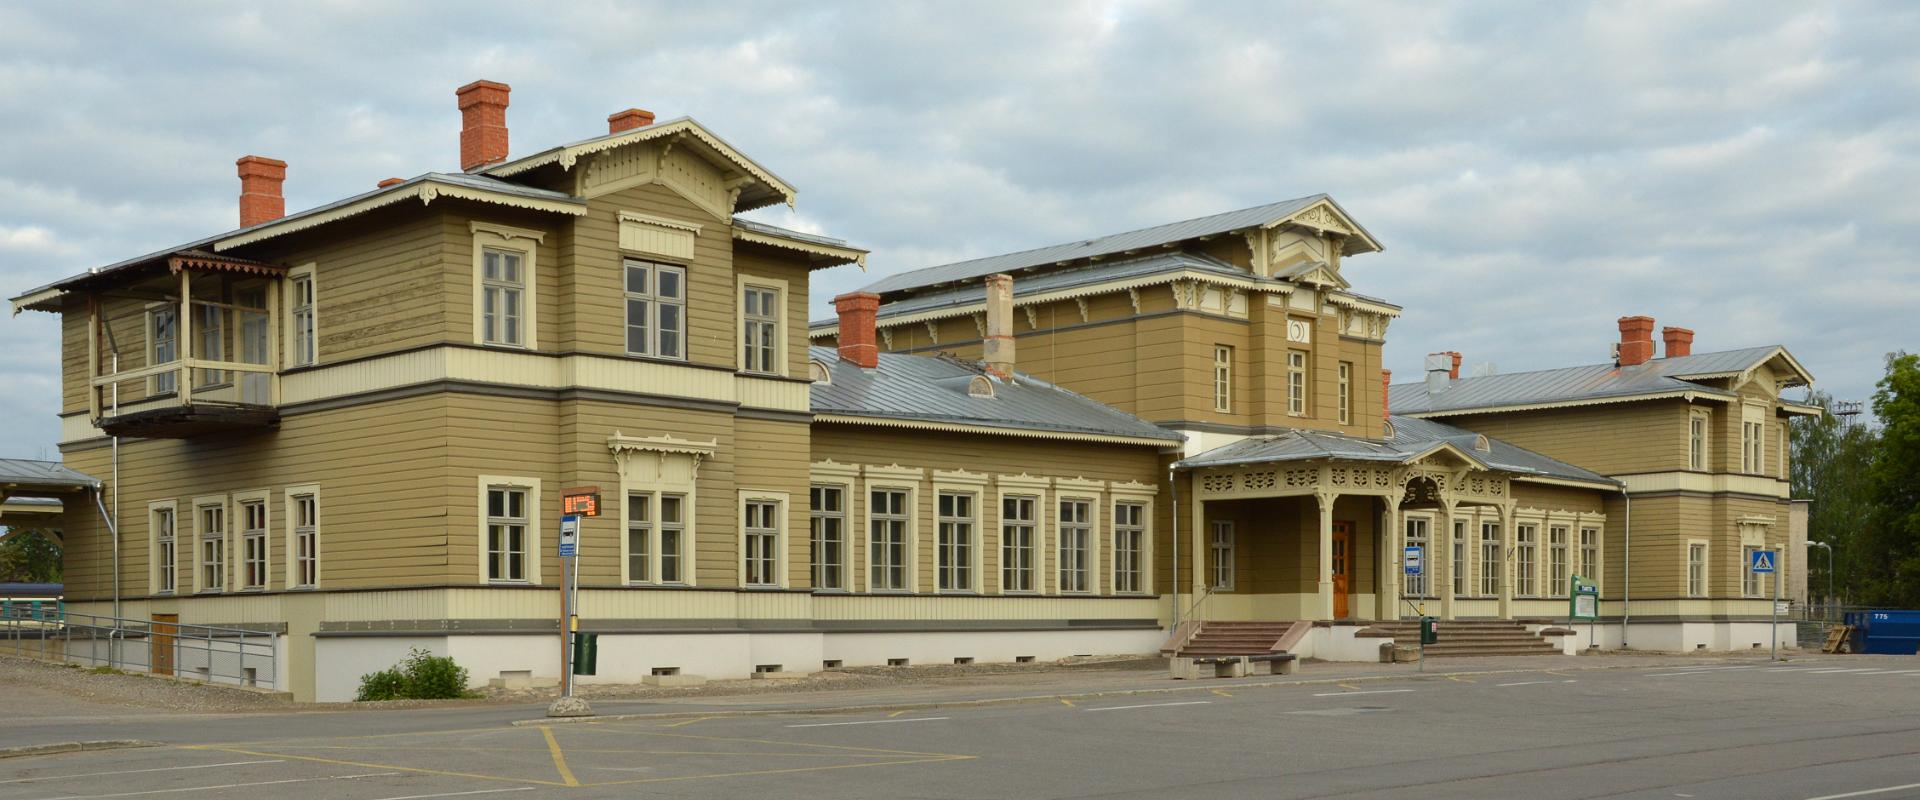 Tartu Railway Station